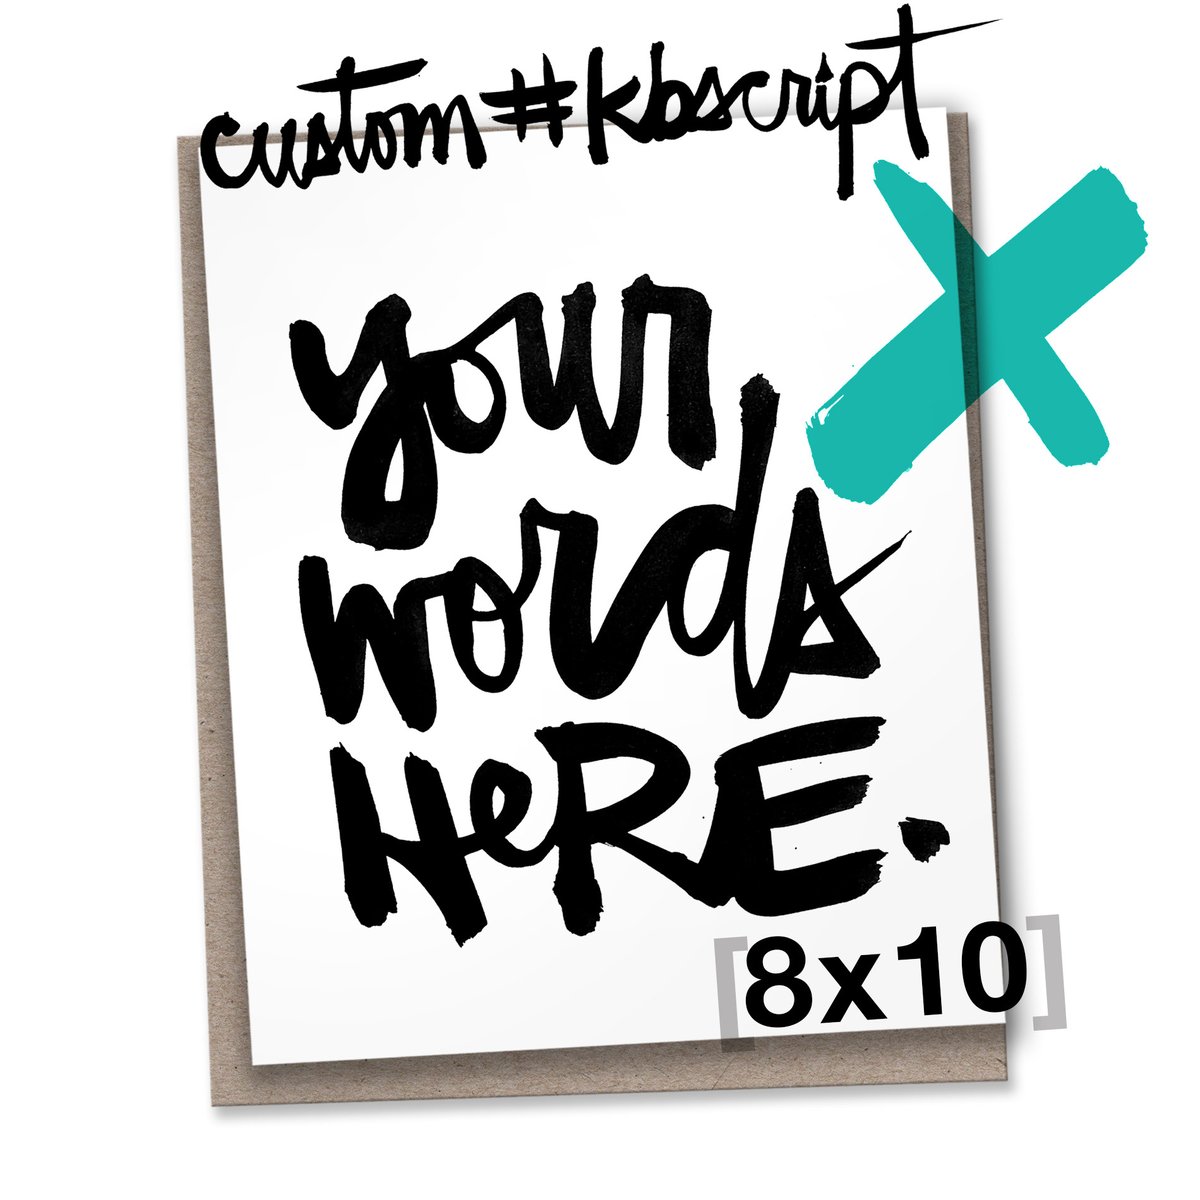 Image of CUSTOM #kbscript 8x10